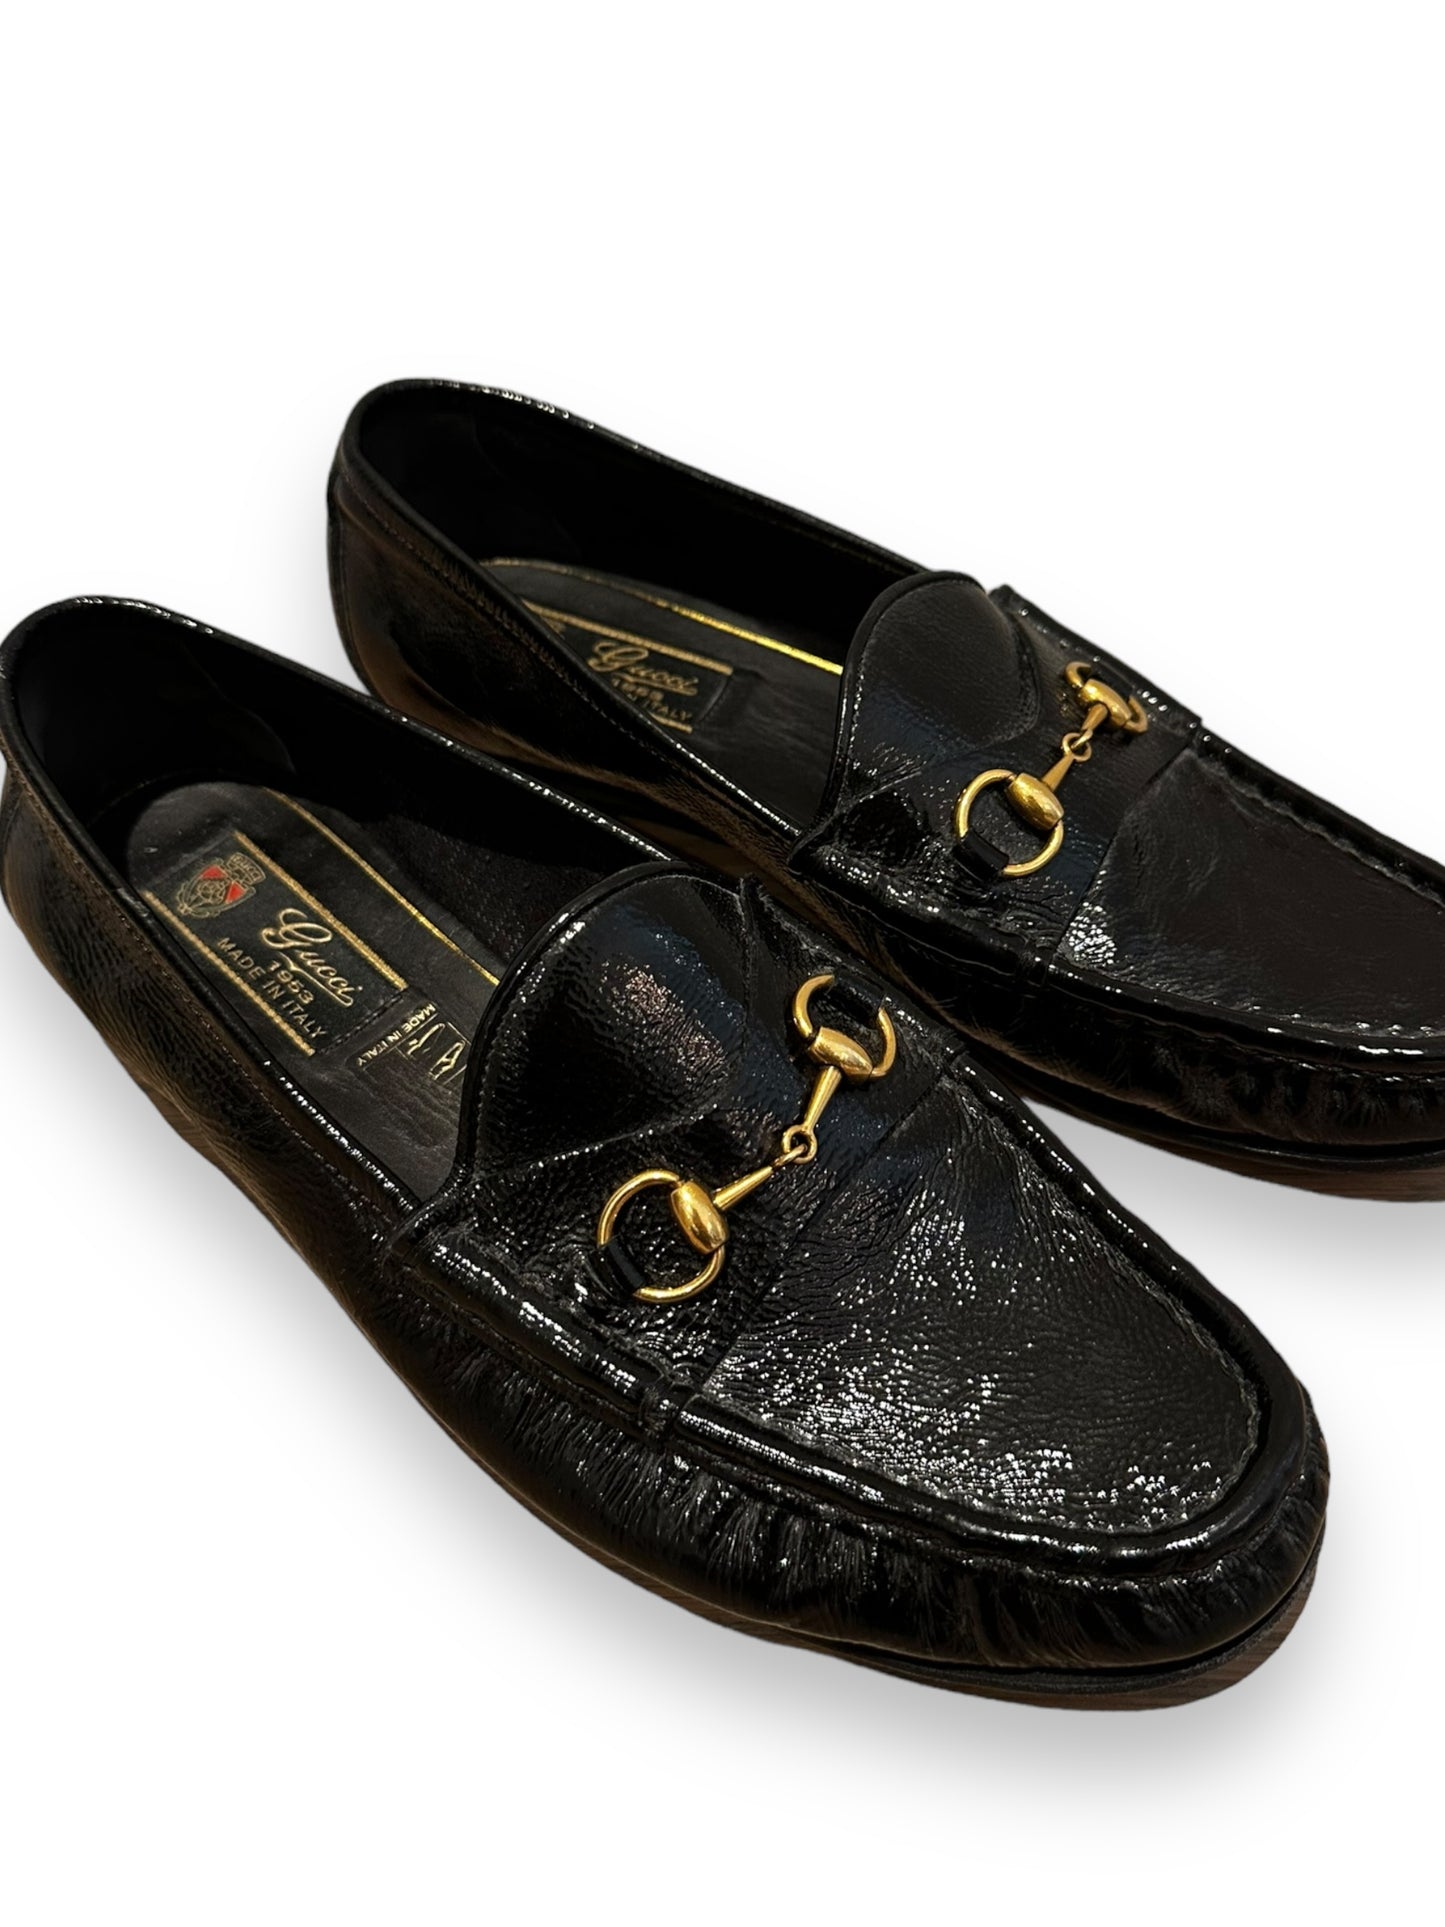 Gucci Vintage Horsebit Loafers Size 39